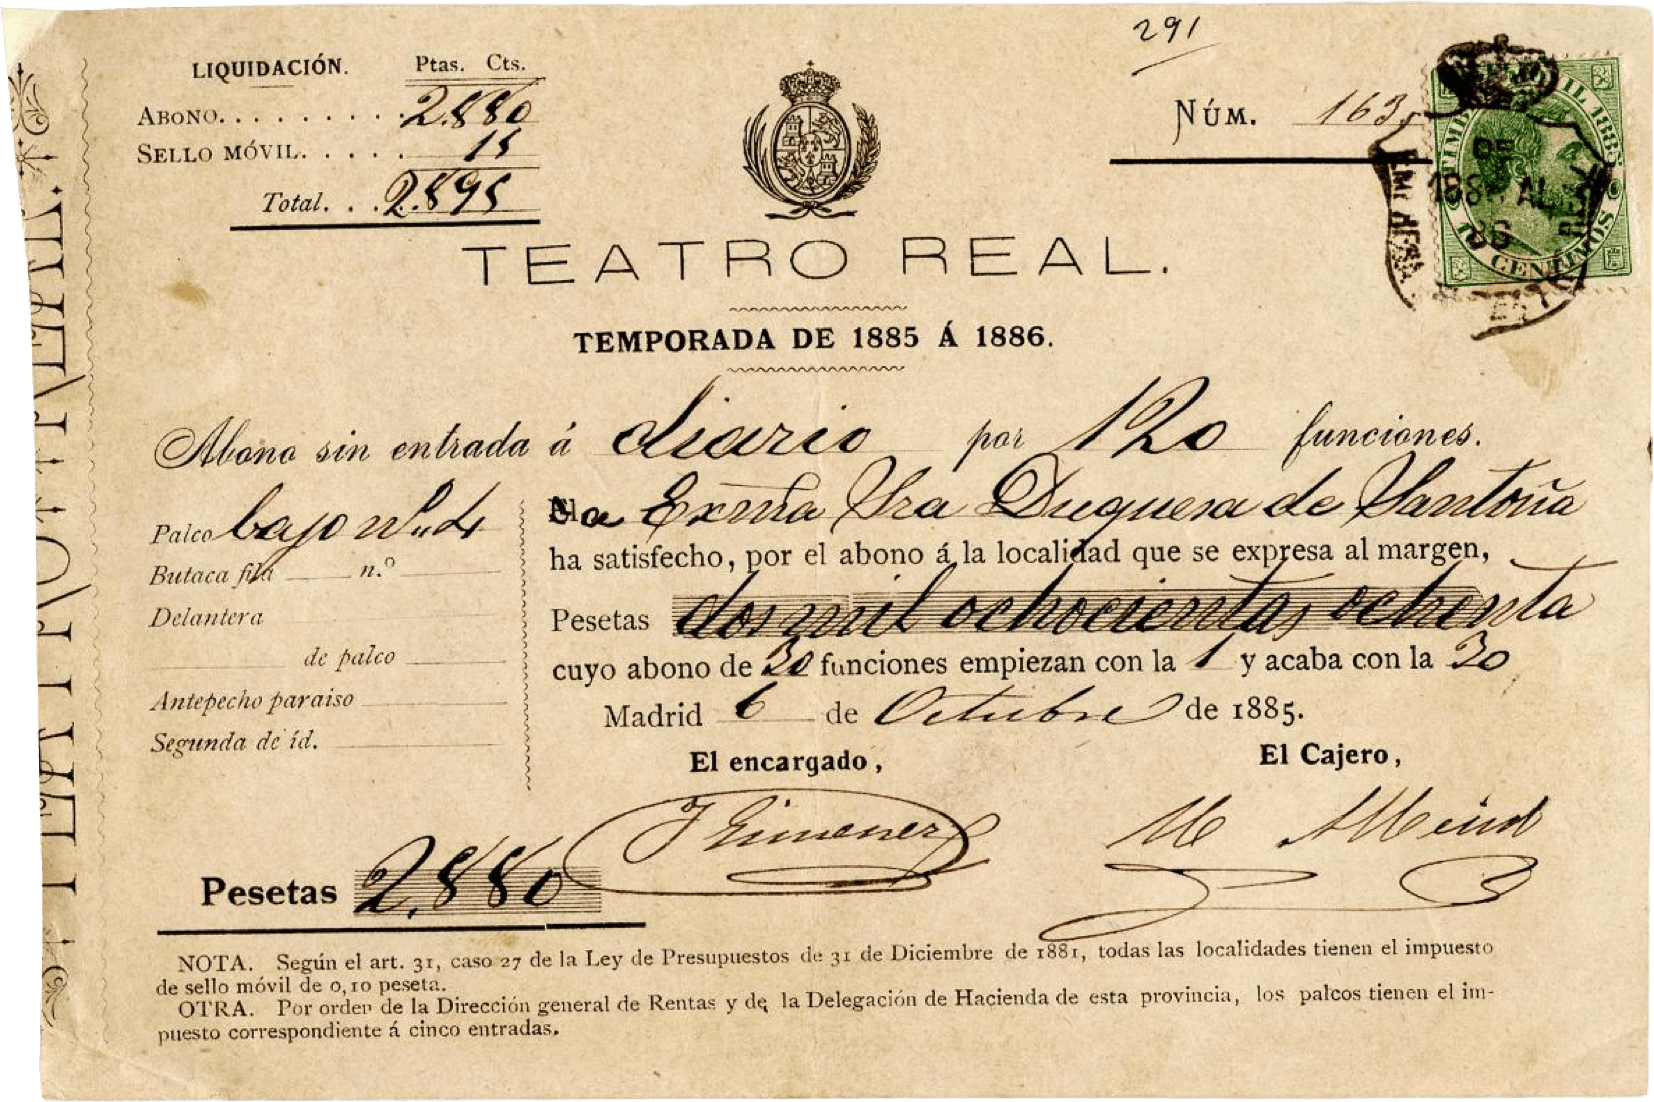 Receipt of a season ticket for the Teatro Real. Season 1885/86. Photo: MAE Institut del Teatre